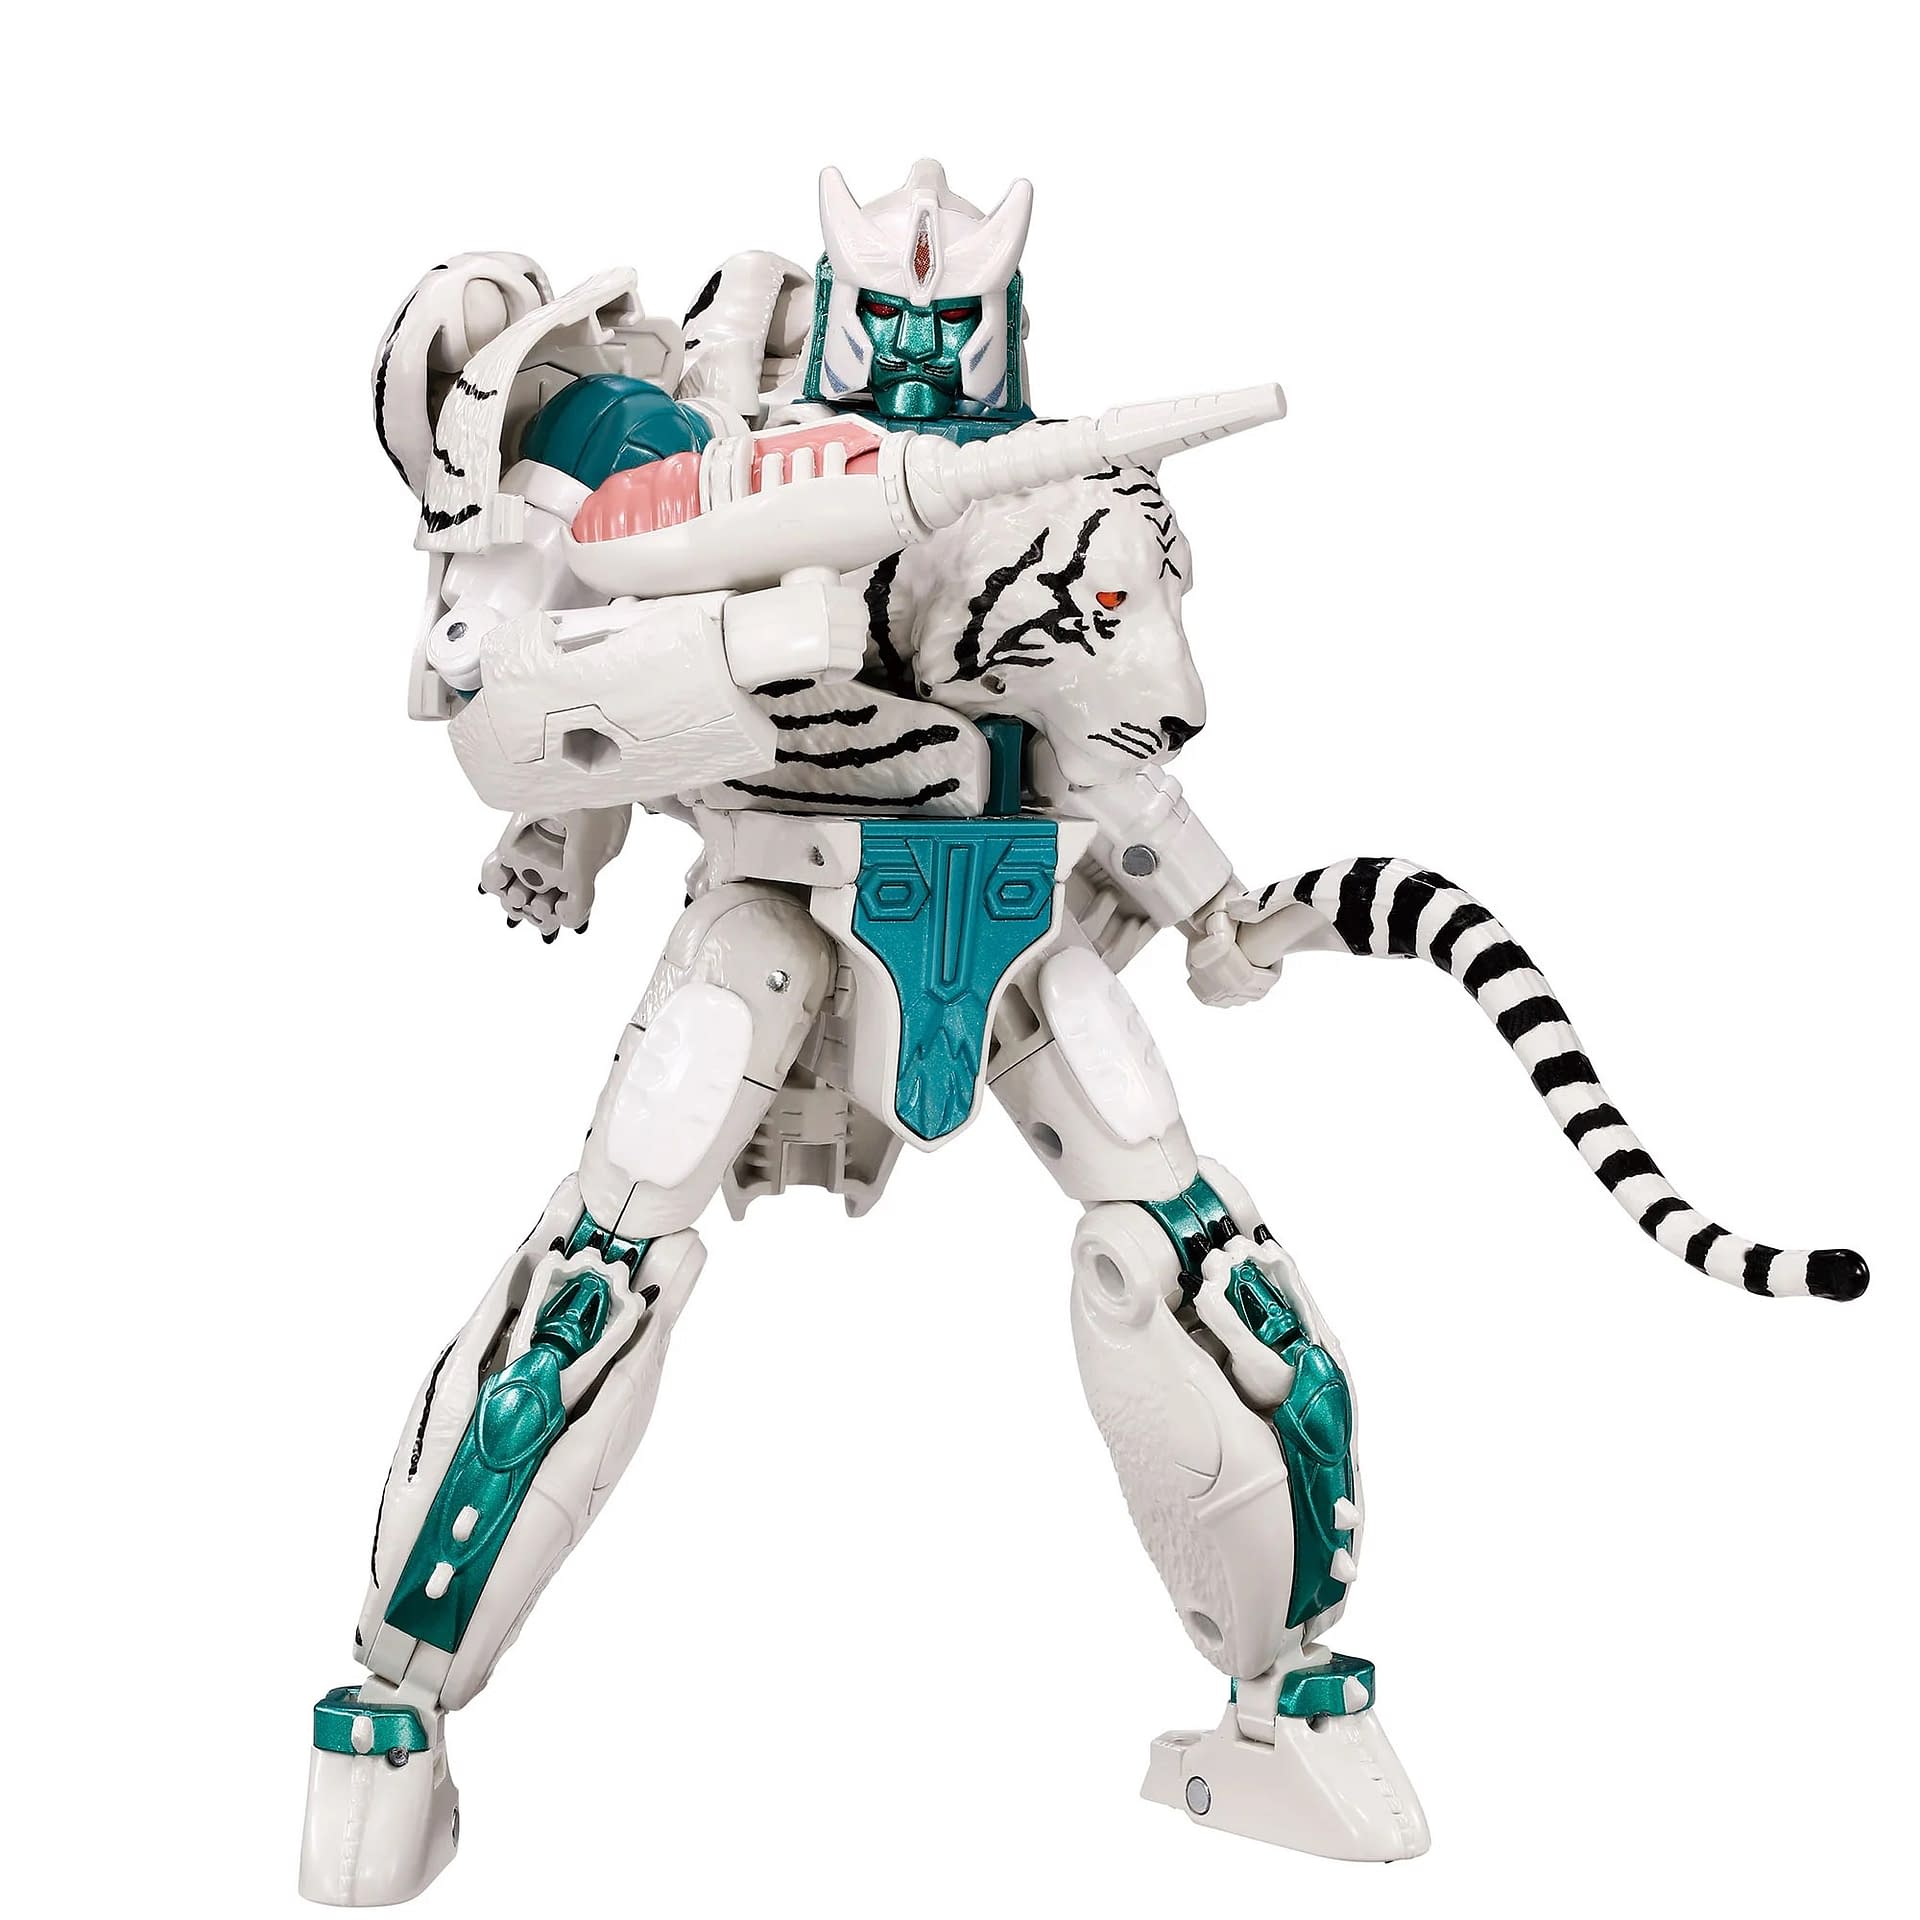  Hasbro Debuts Another Transformers Takara Tomy Beast Wars 2-Pack